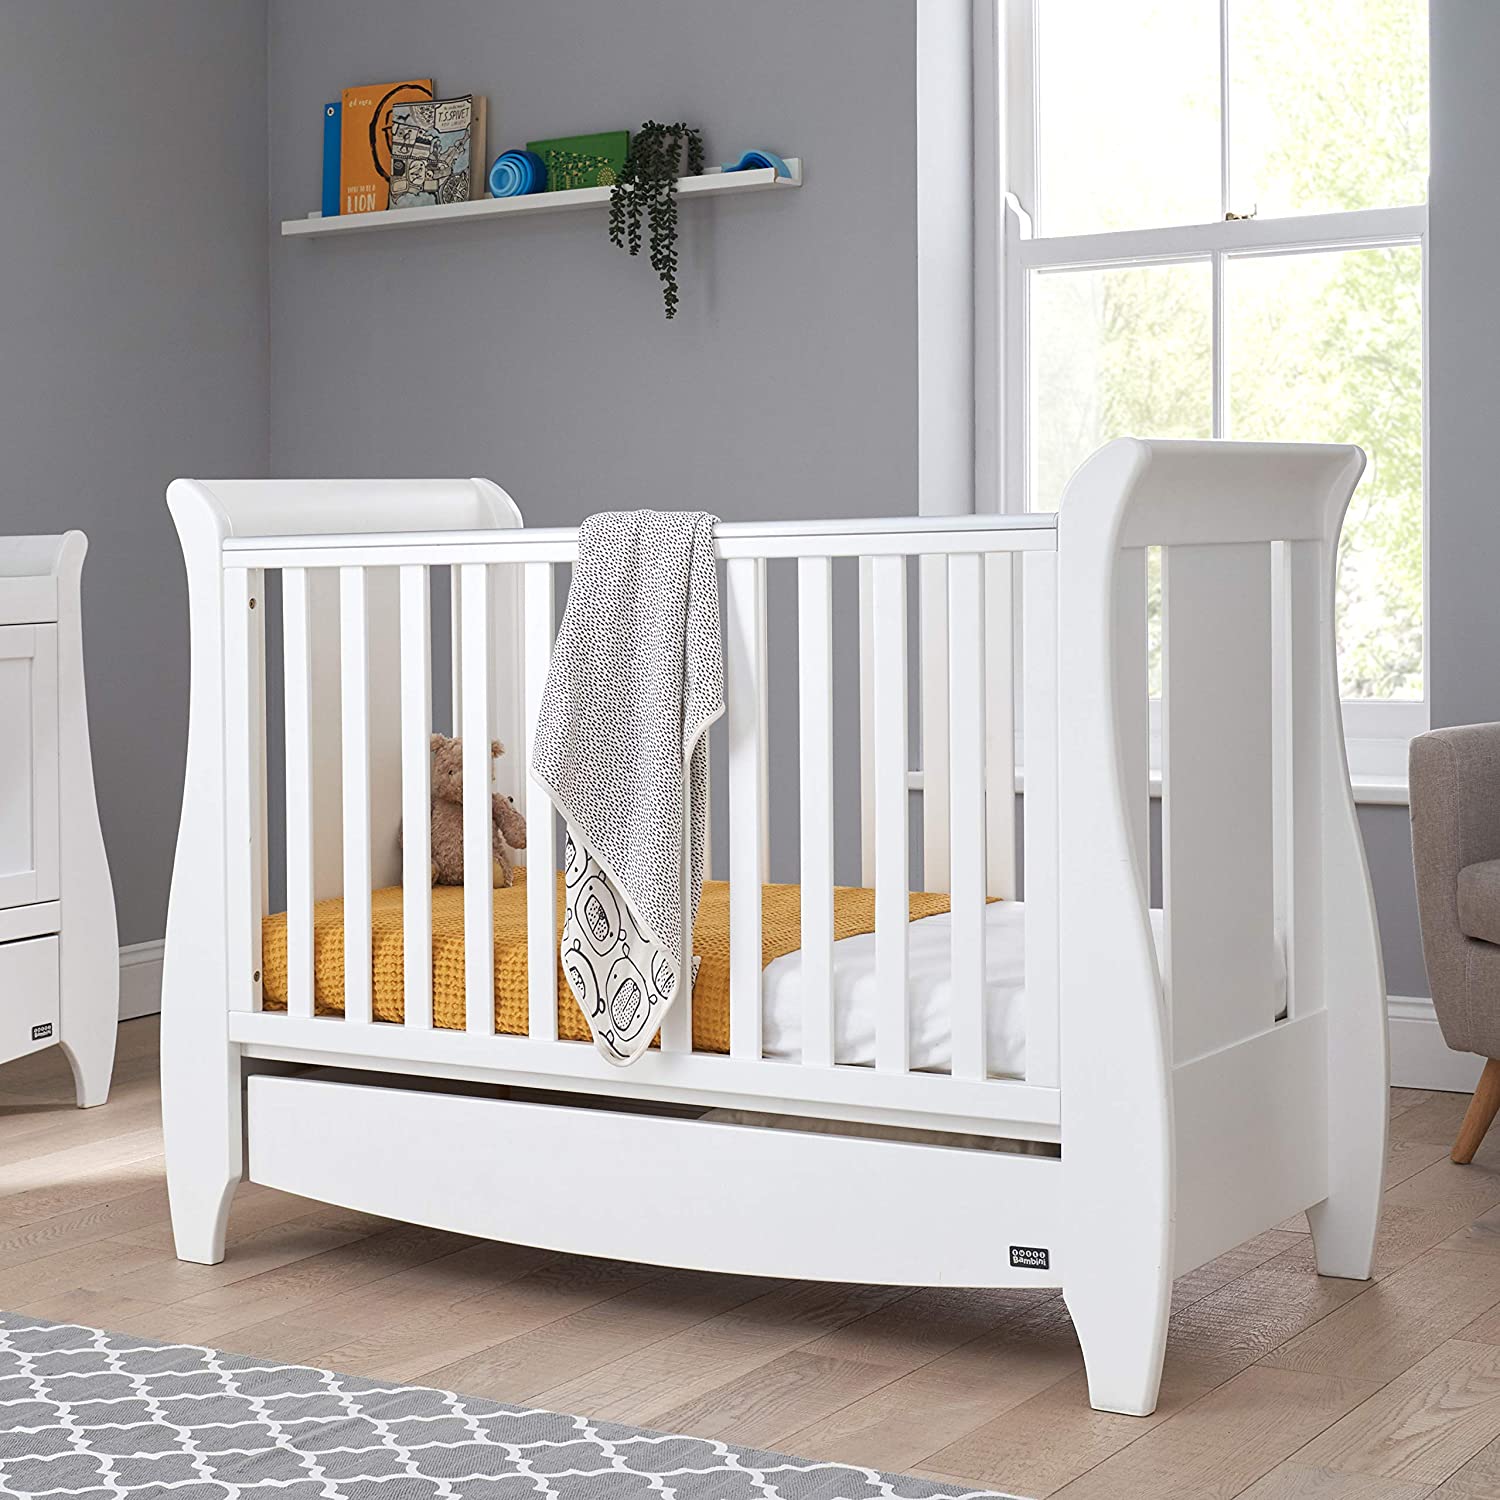 Amazing Baby Cot Bed Full Size 126x66cm White grey Wood Convert Junior new UK